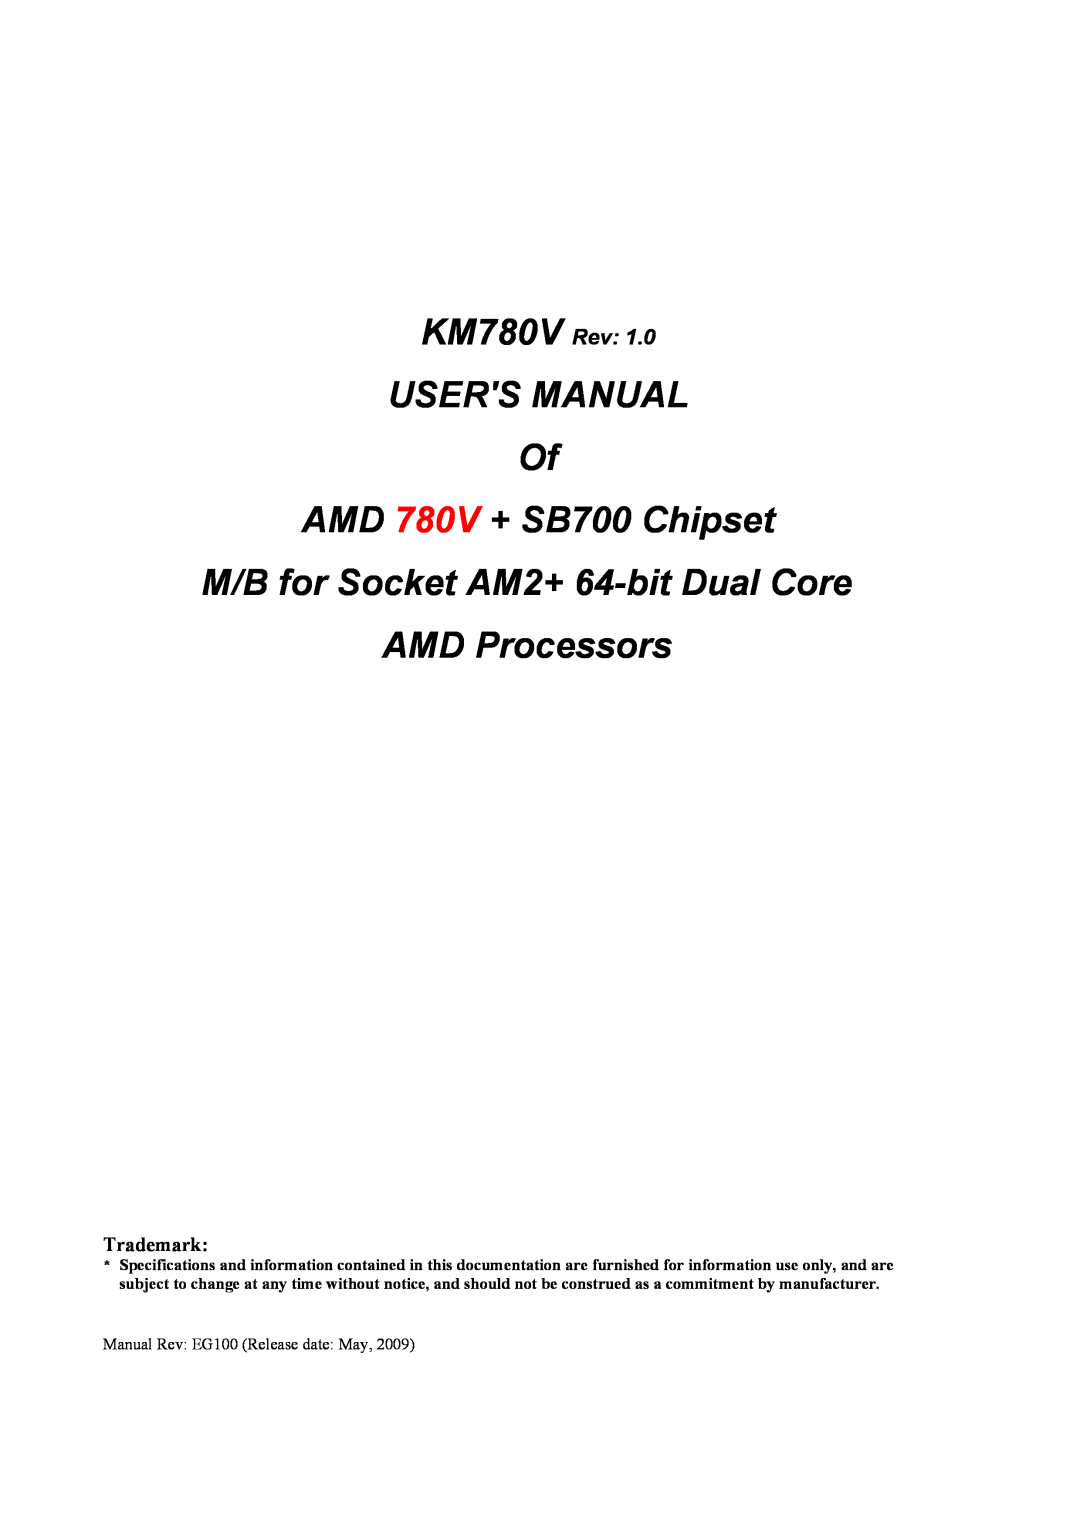 AMD KM780V user manual USERS MANUAL Of, AMD 780V + SB700 Chipset M/B for Socket AM2+ 64-bit Dual Core, AMD Processors 